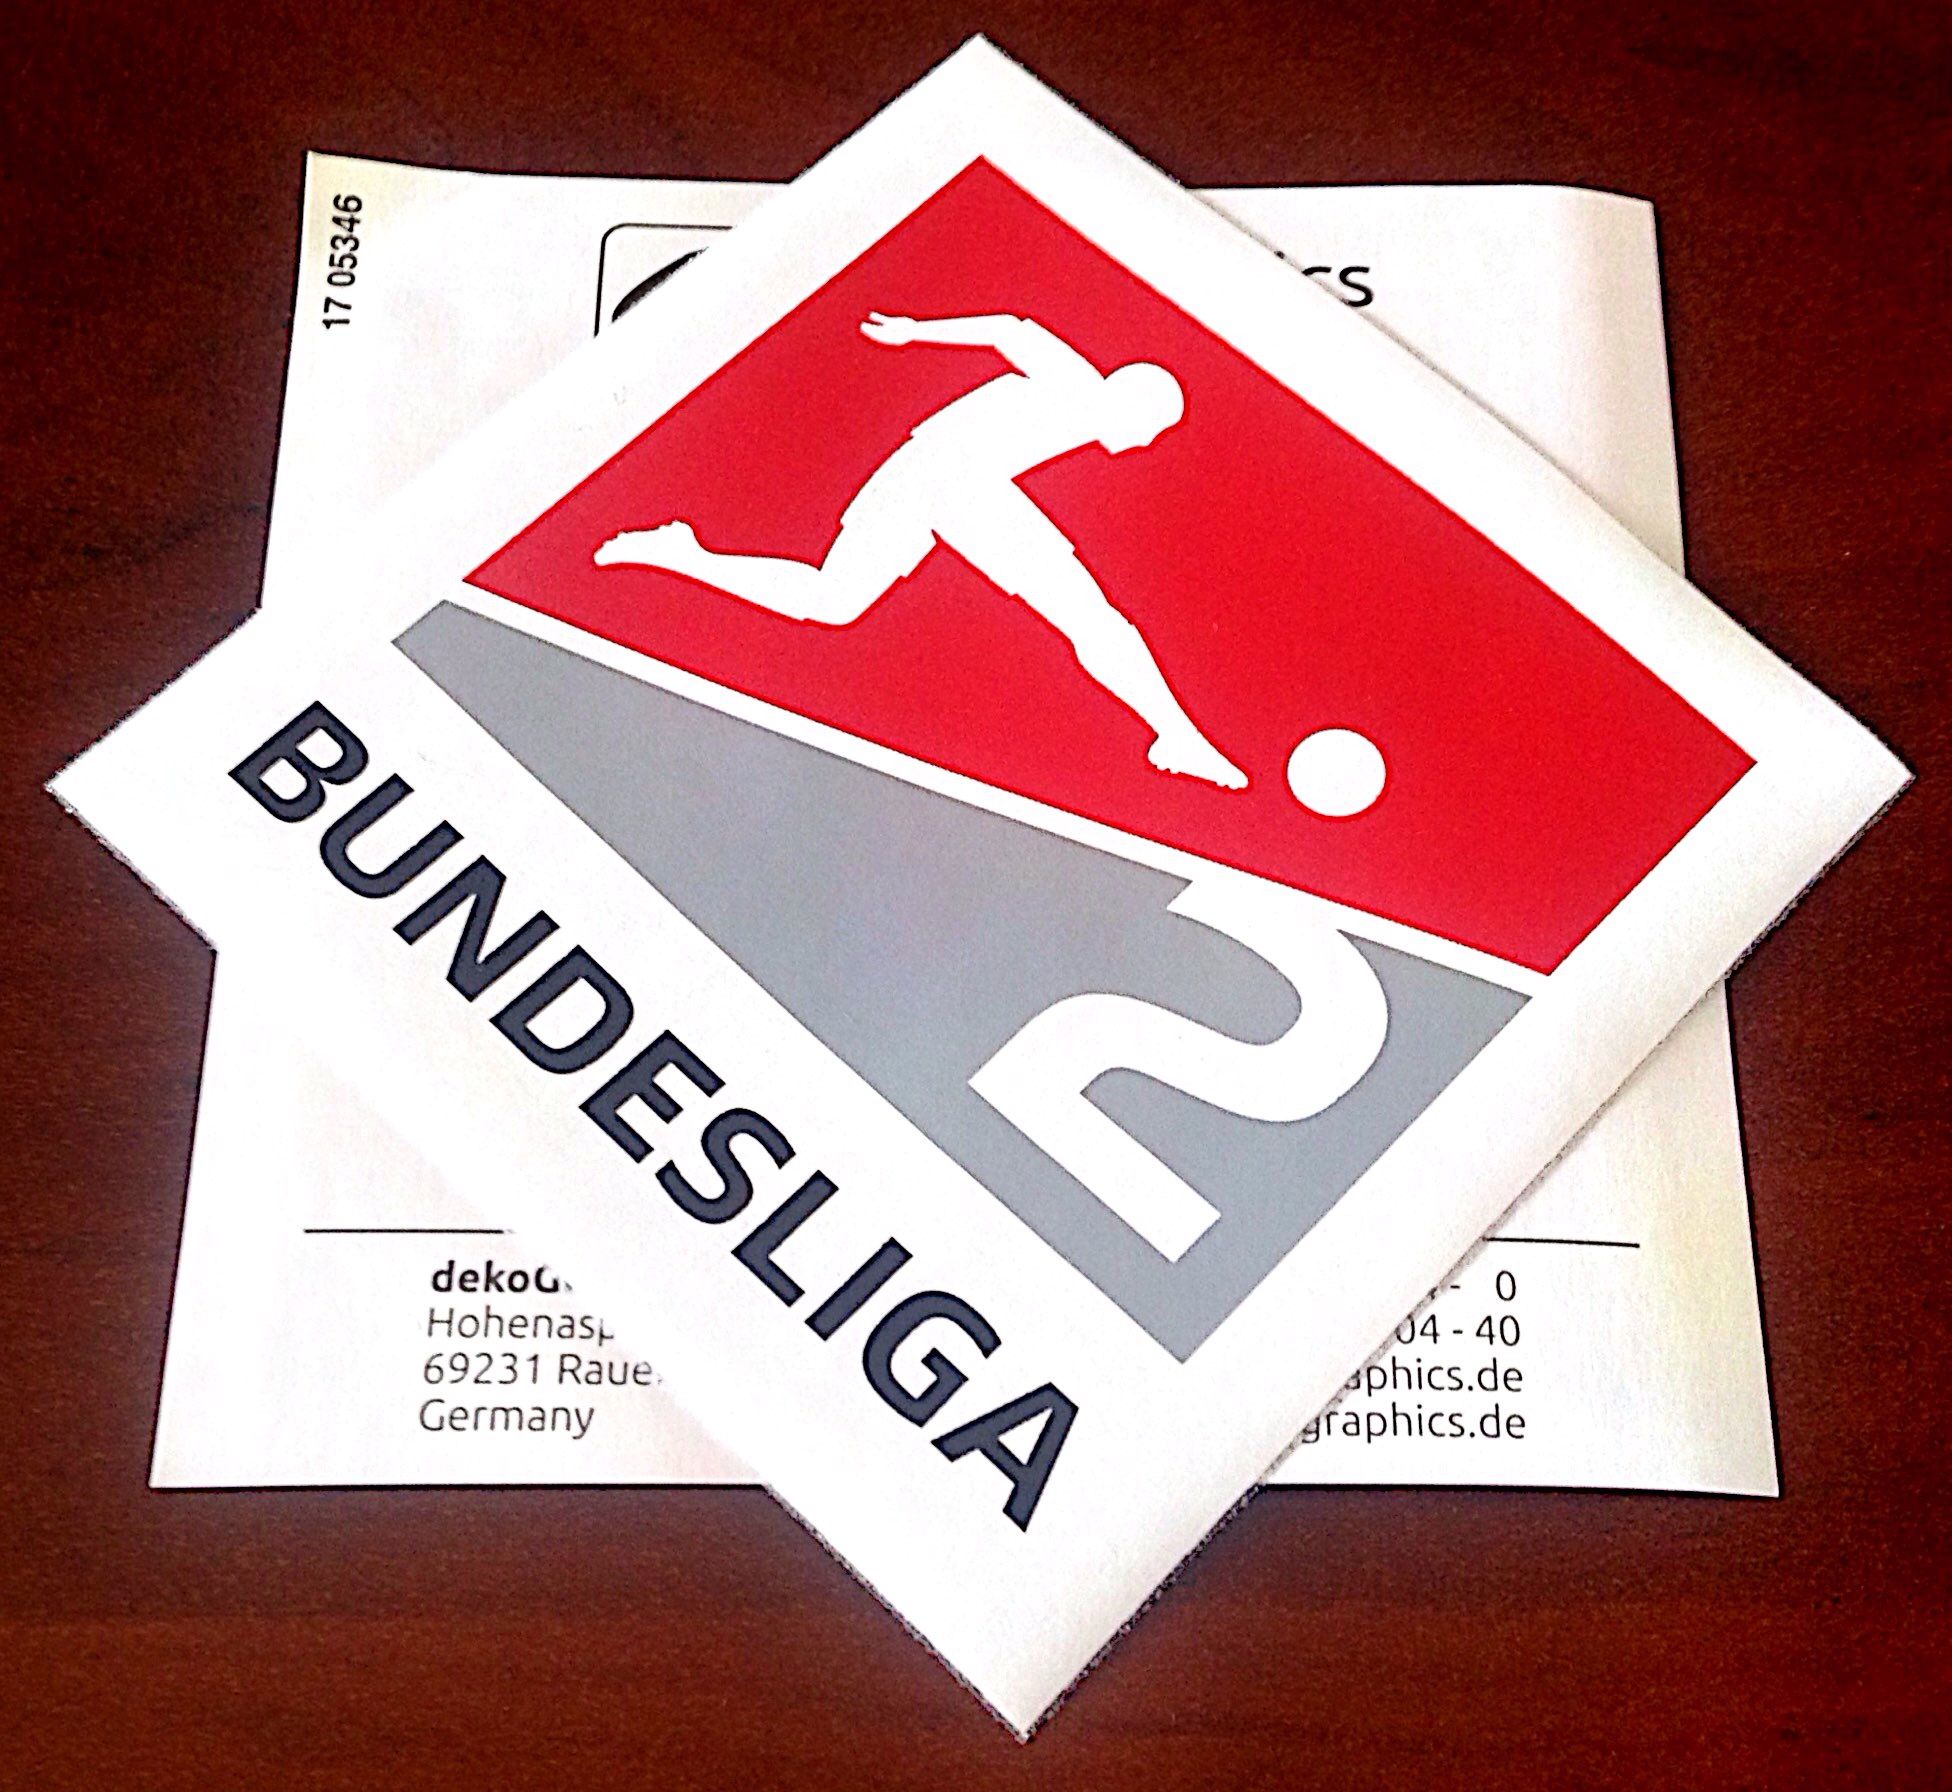 Arminia Bielefeld VS Union Berlin ( BETTING TIPS, Match Preview & Expert Analysis )